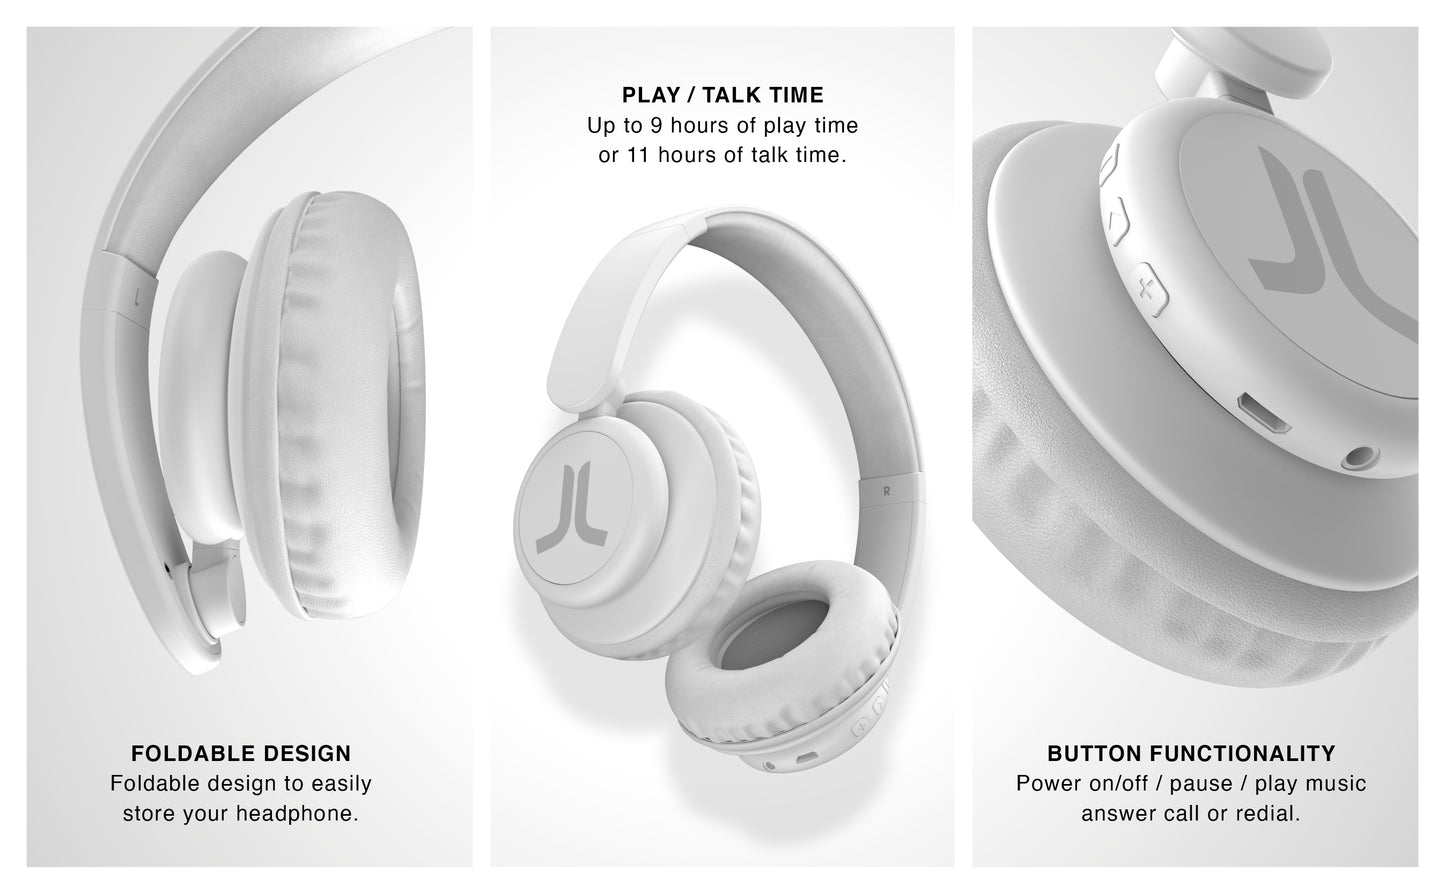 WESC Audio Wireless Bluetooth On Ear Headphones - White